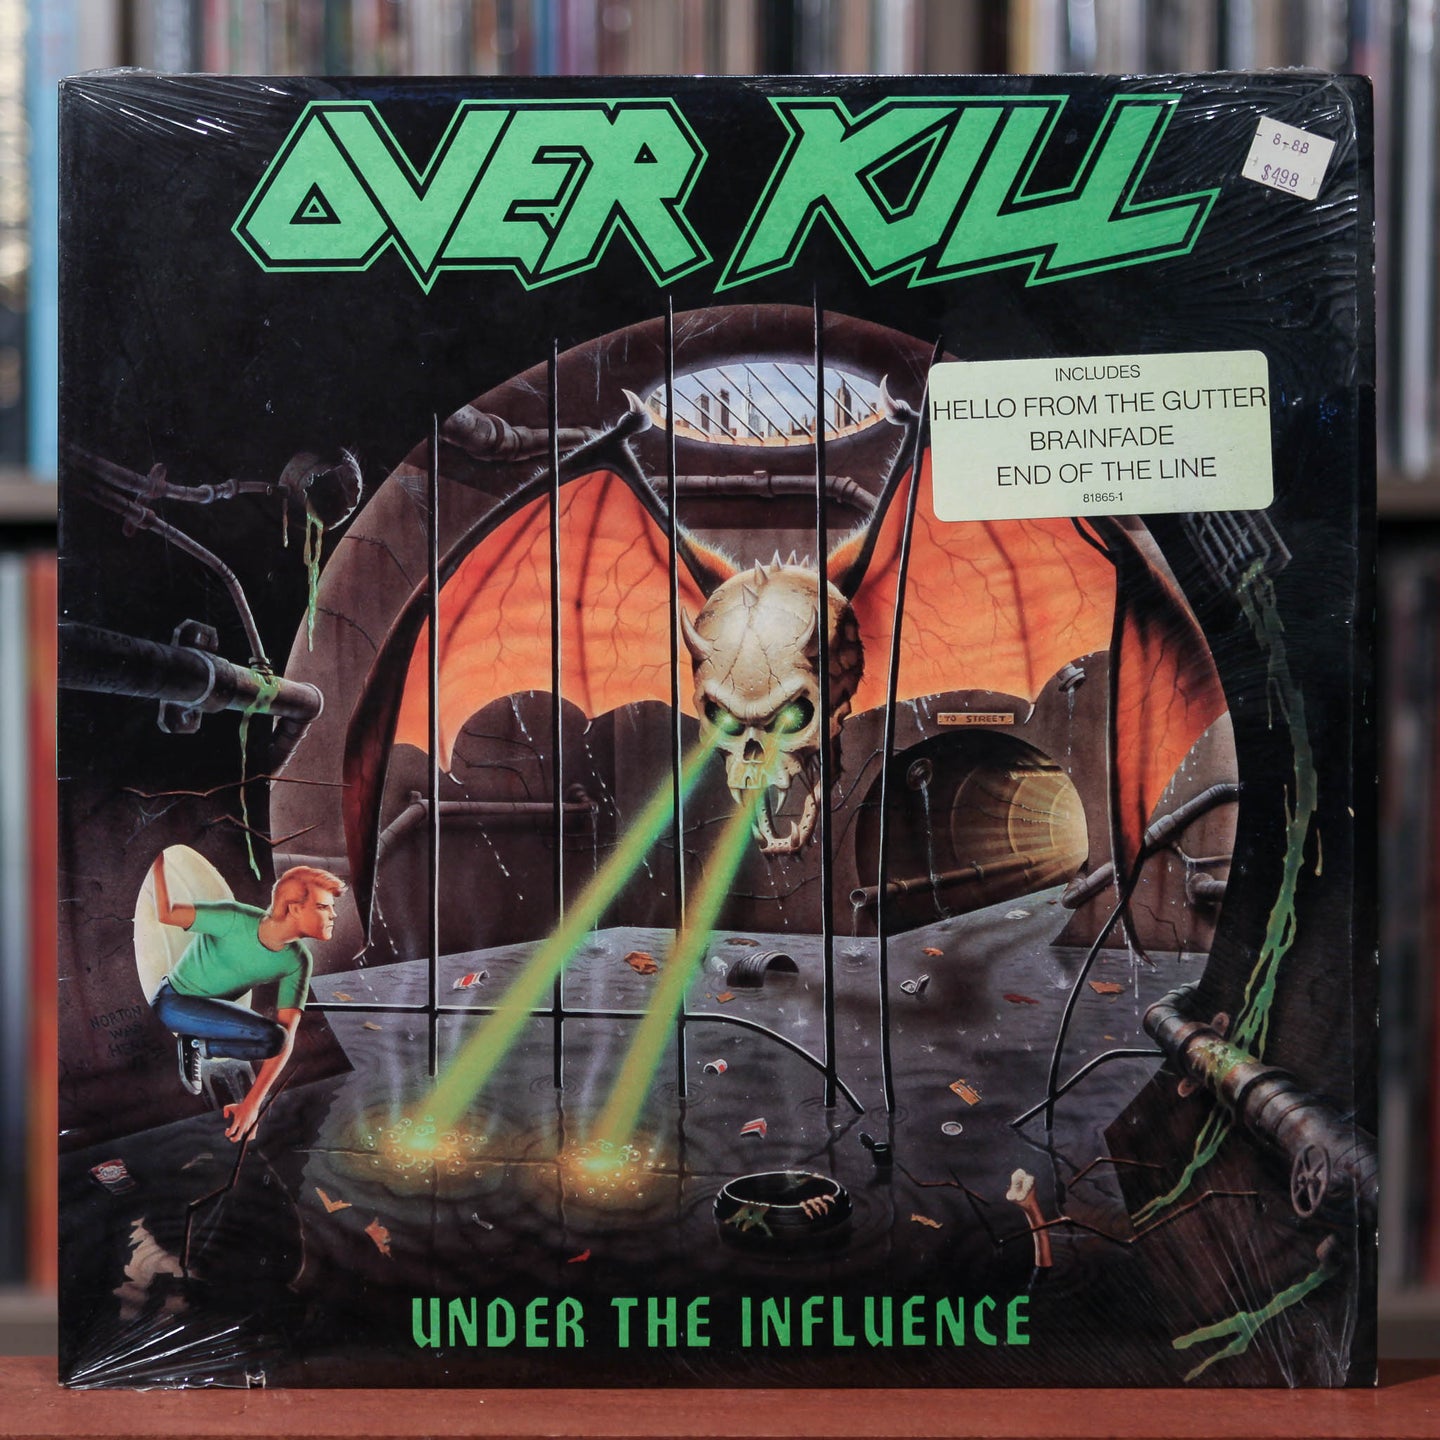 Overkill - Under The Influence - 1988 Megaforce Worldwide, VG+/VG+